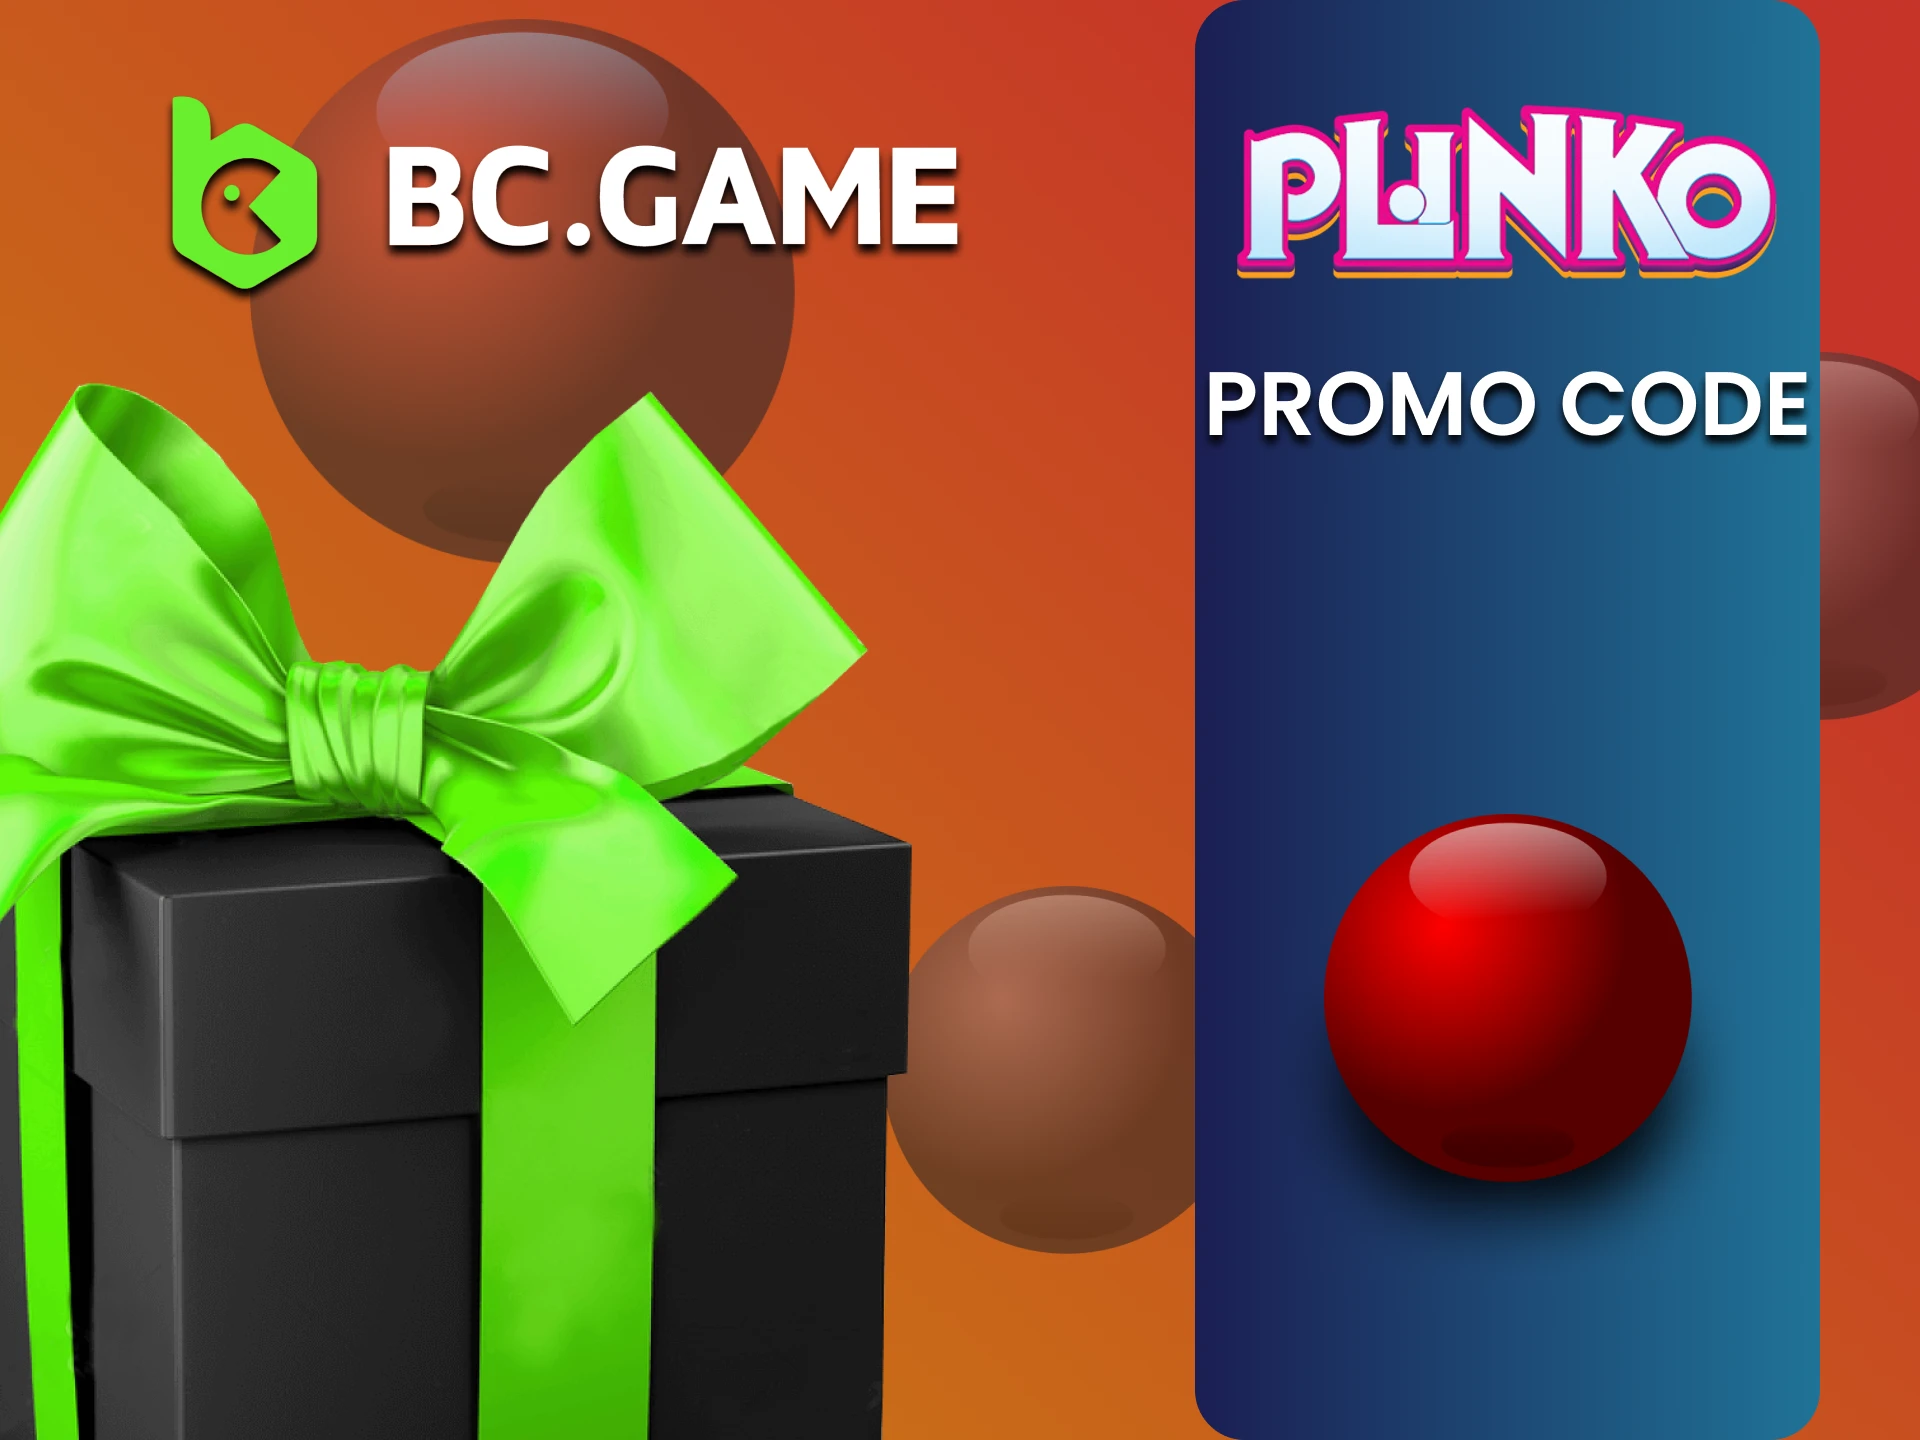 Take advantage of BC Game Plinko promo codes and claim your incredible bonus.